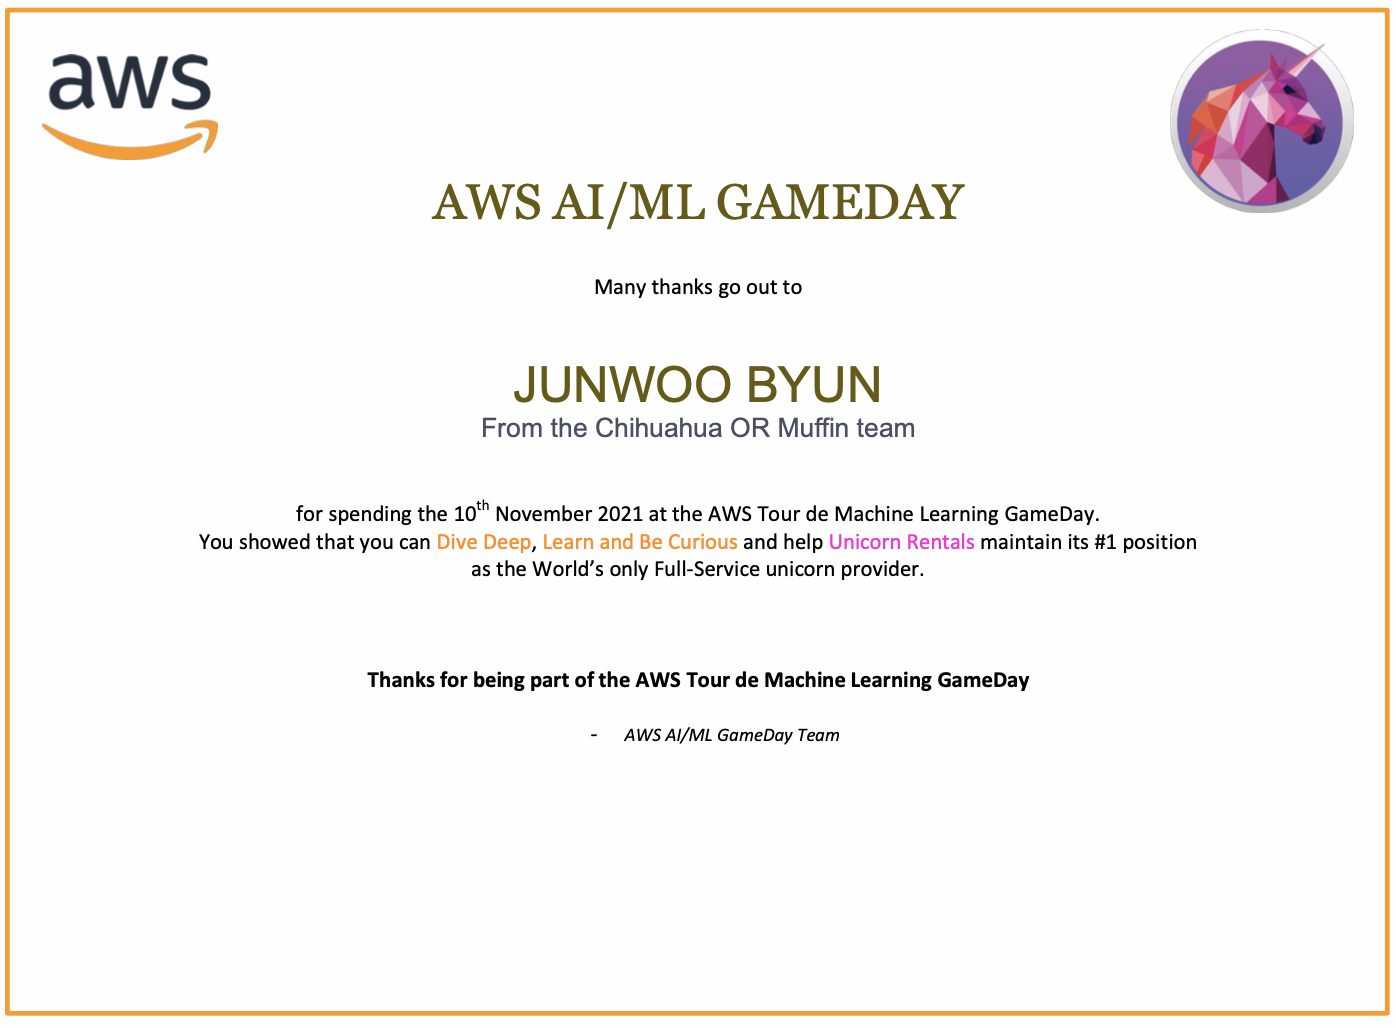 AWS Gameday ASEAN 대회는 1등 인증서도 발급해 주었습니다 🙂